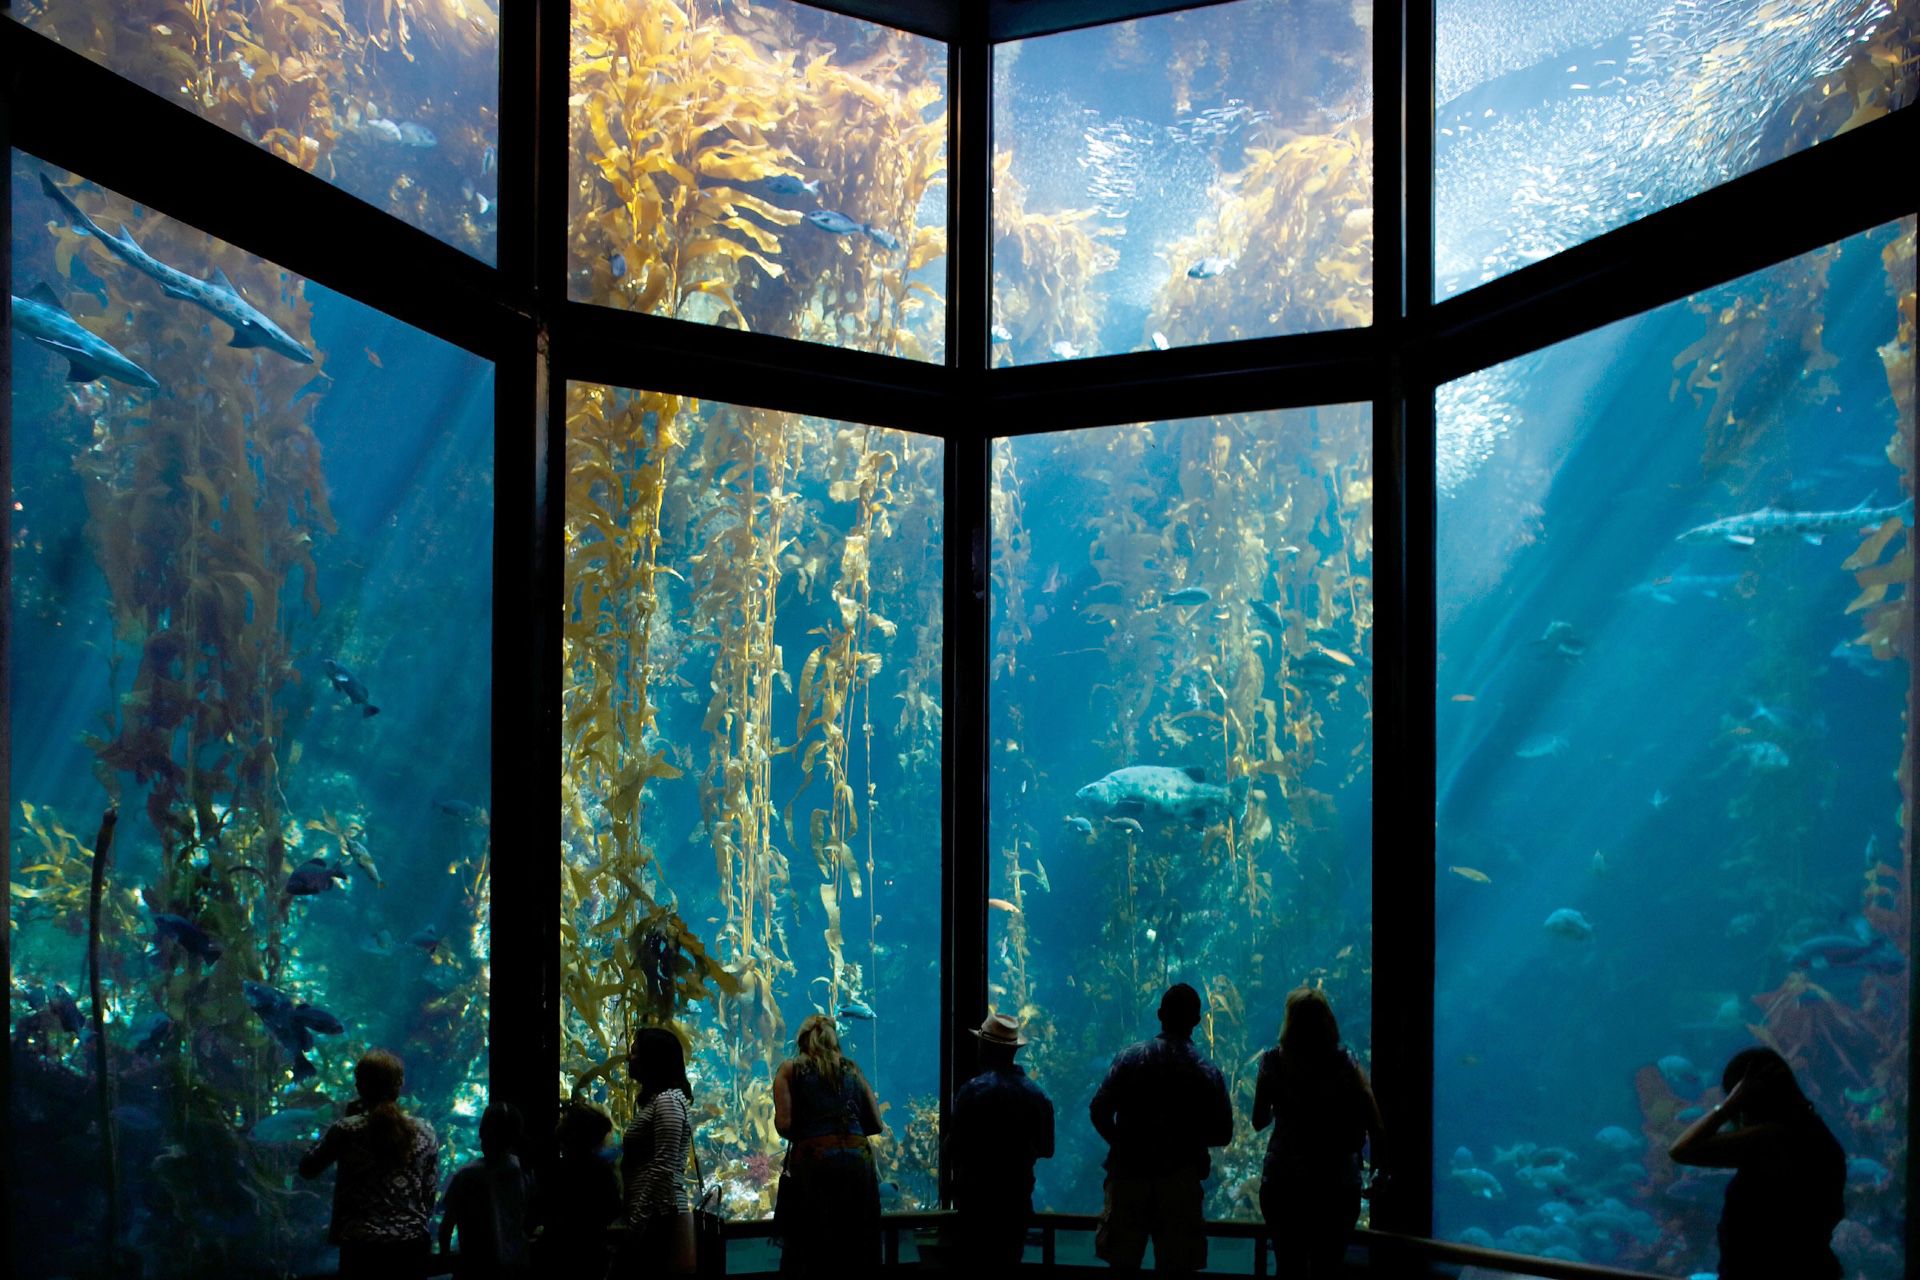 Monterey Bay aquarium Tickets 